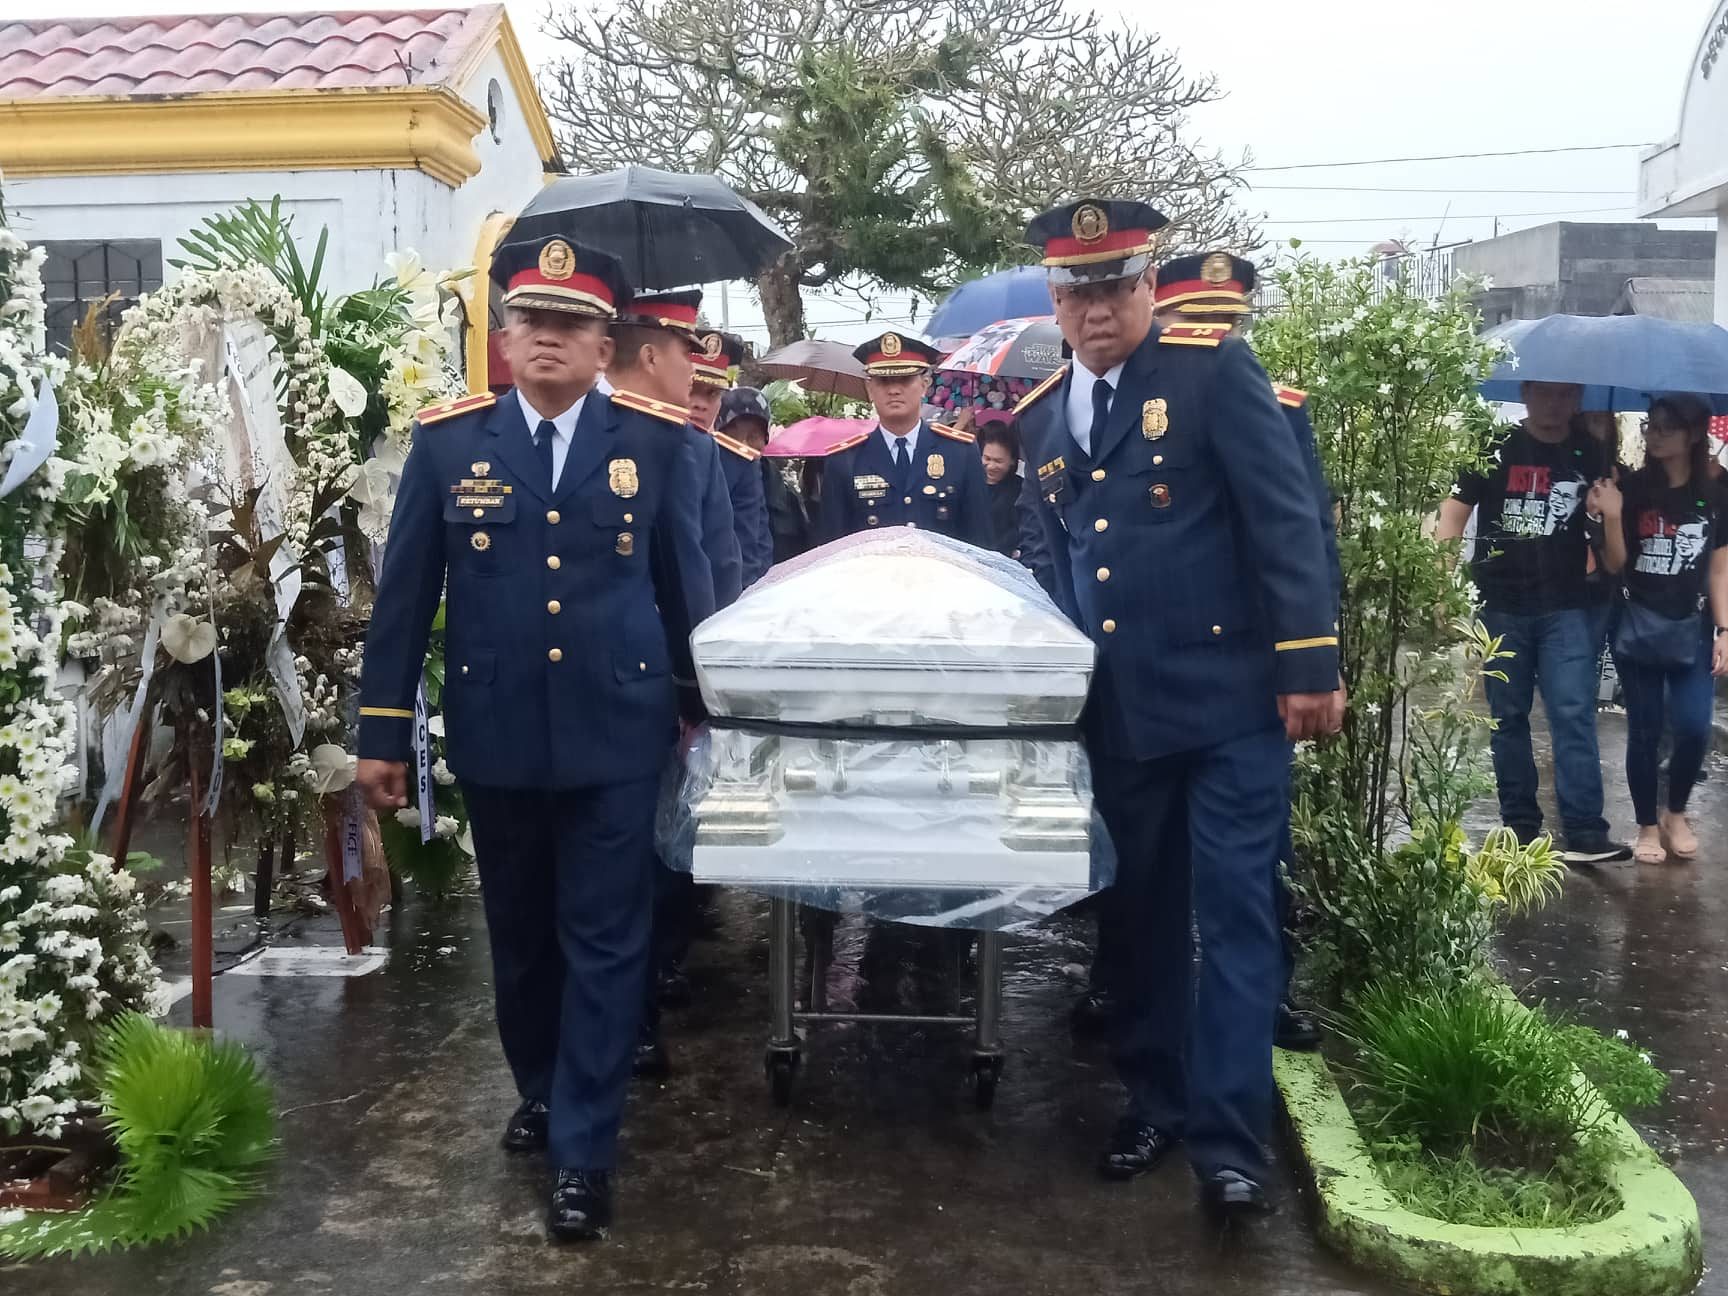 AKO Bicol Representative Rodel Batocabe laid to rest in Albay